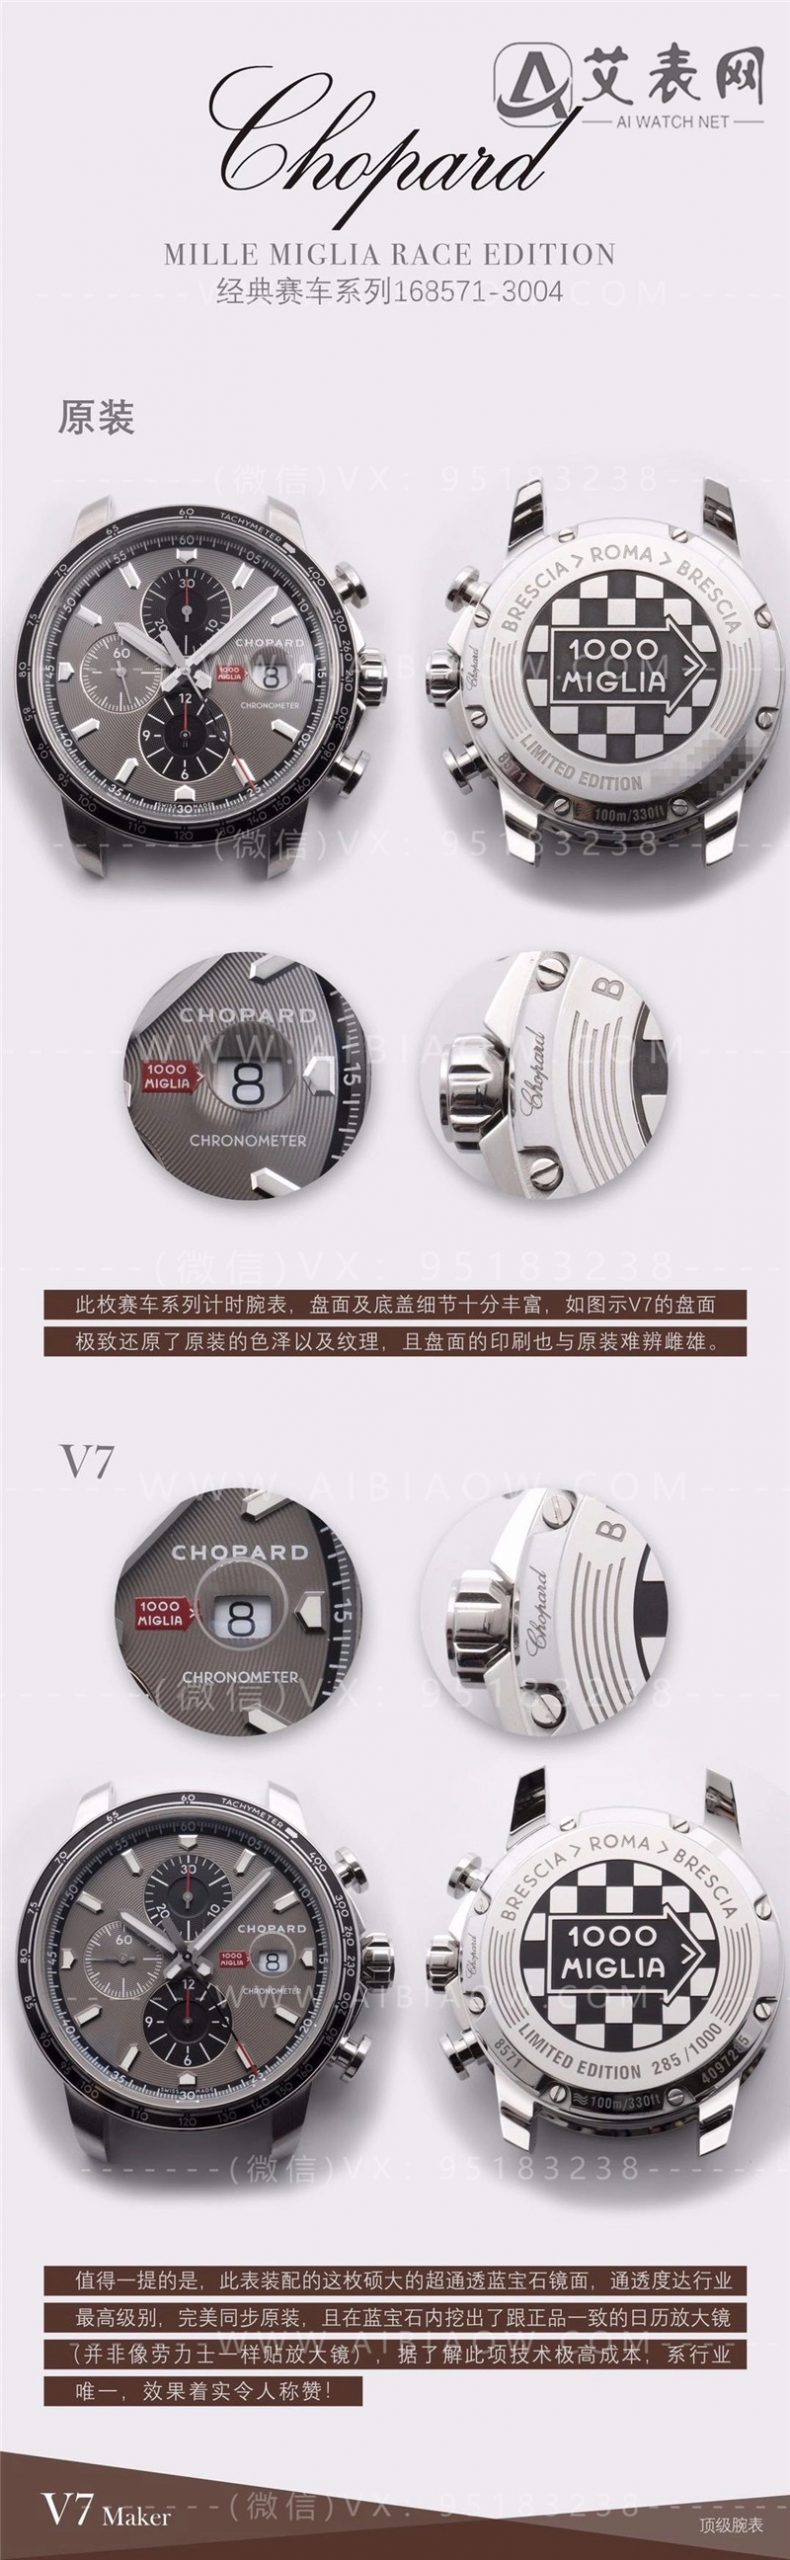 V7厂萧邦chopard经典赛车系列44mm男士腕表对比正品评测  第3张